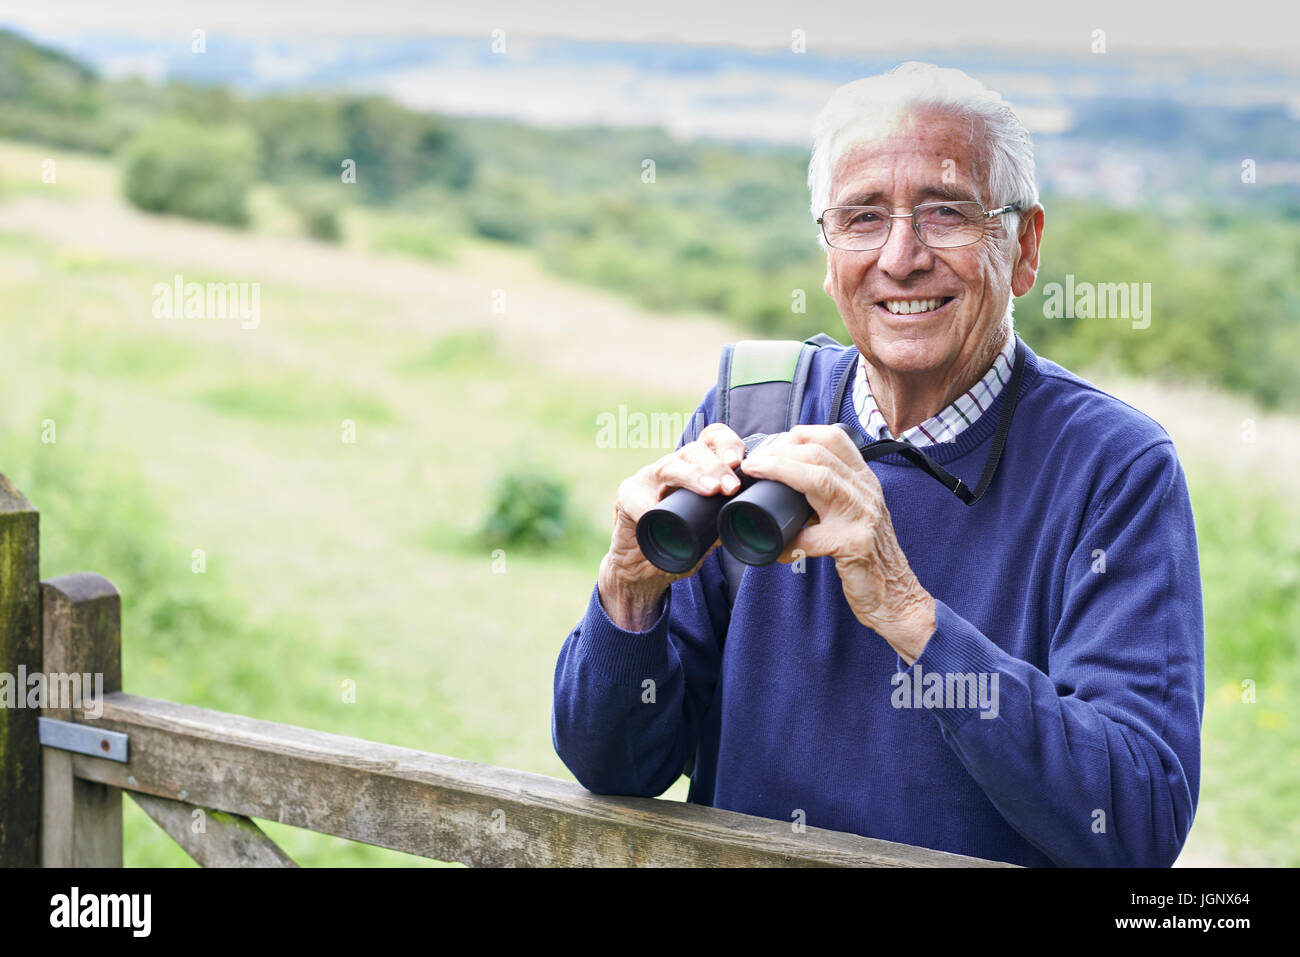 Portrait Of Senior Man On Walk With Binoculars Stock Photo